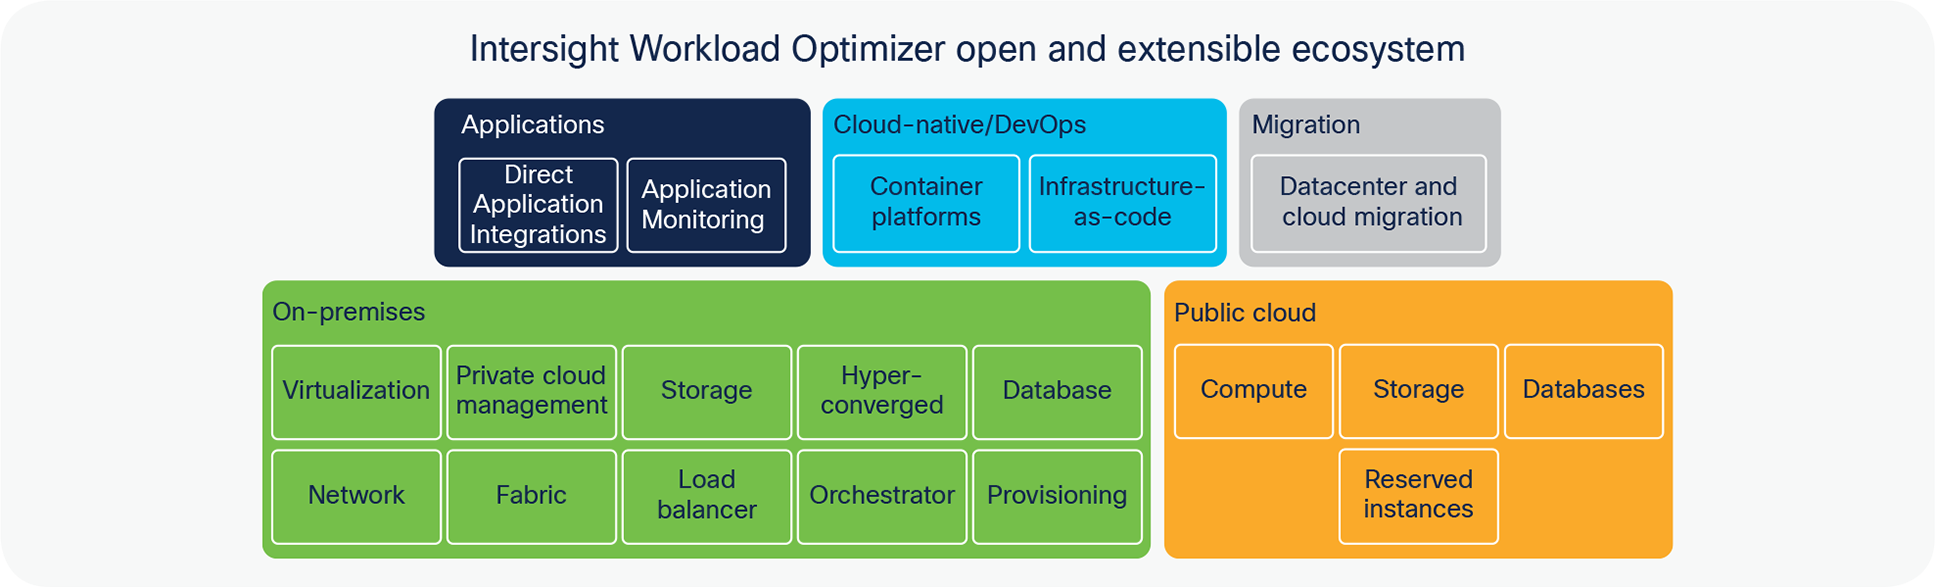 Cisco Intersight Workload Optimizer